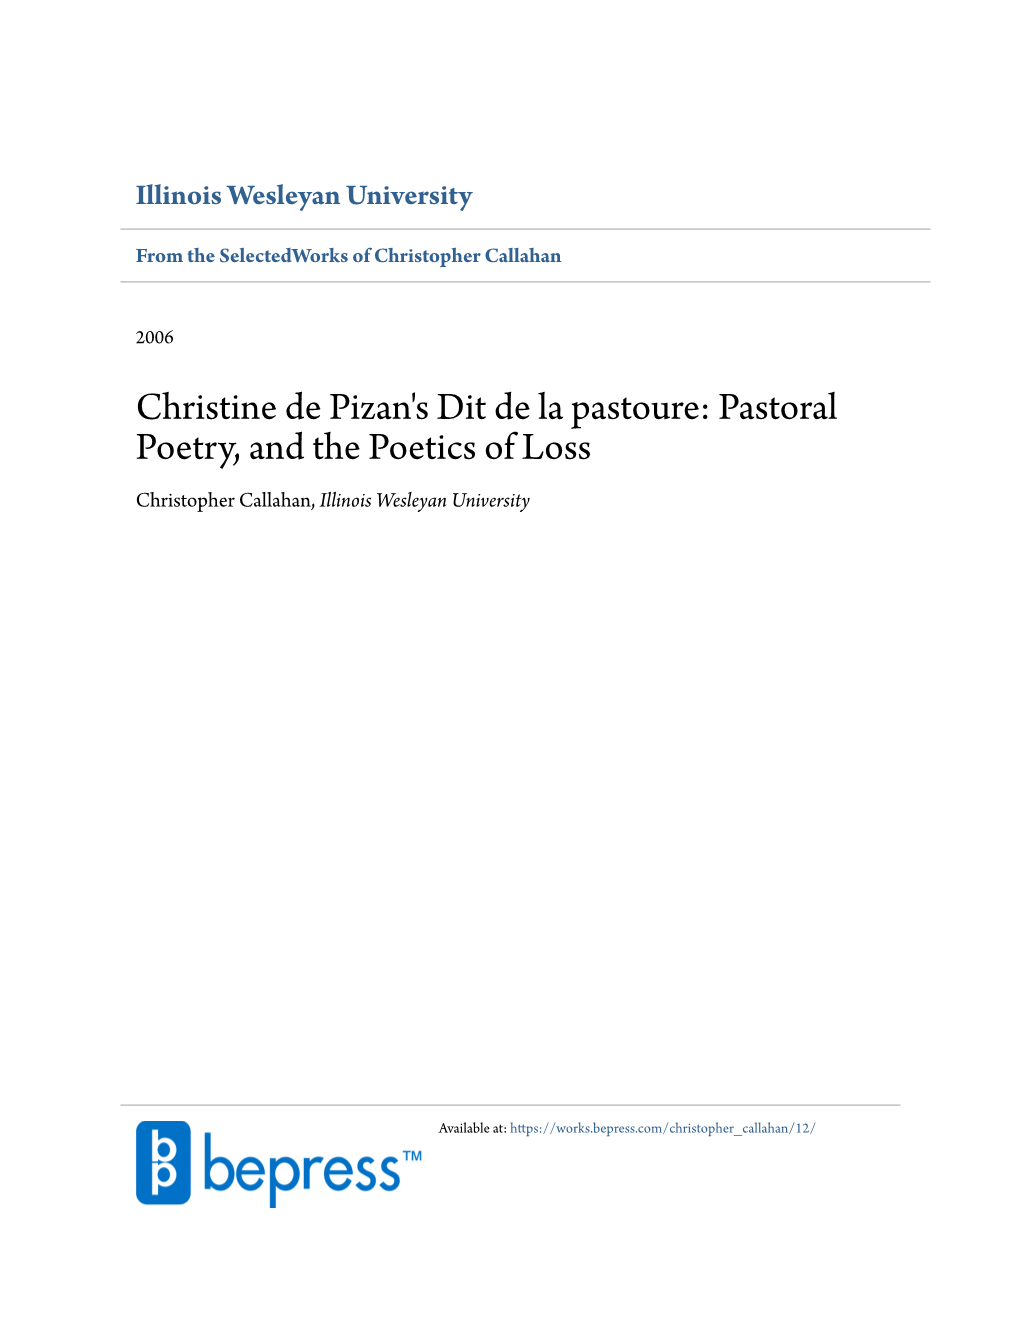 Christine De Pizan's Dit De La Pastoure: Pastoral Poetry, and the Poetics of Loss Christopher Callahan, Illinois Wesleyan University